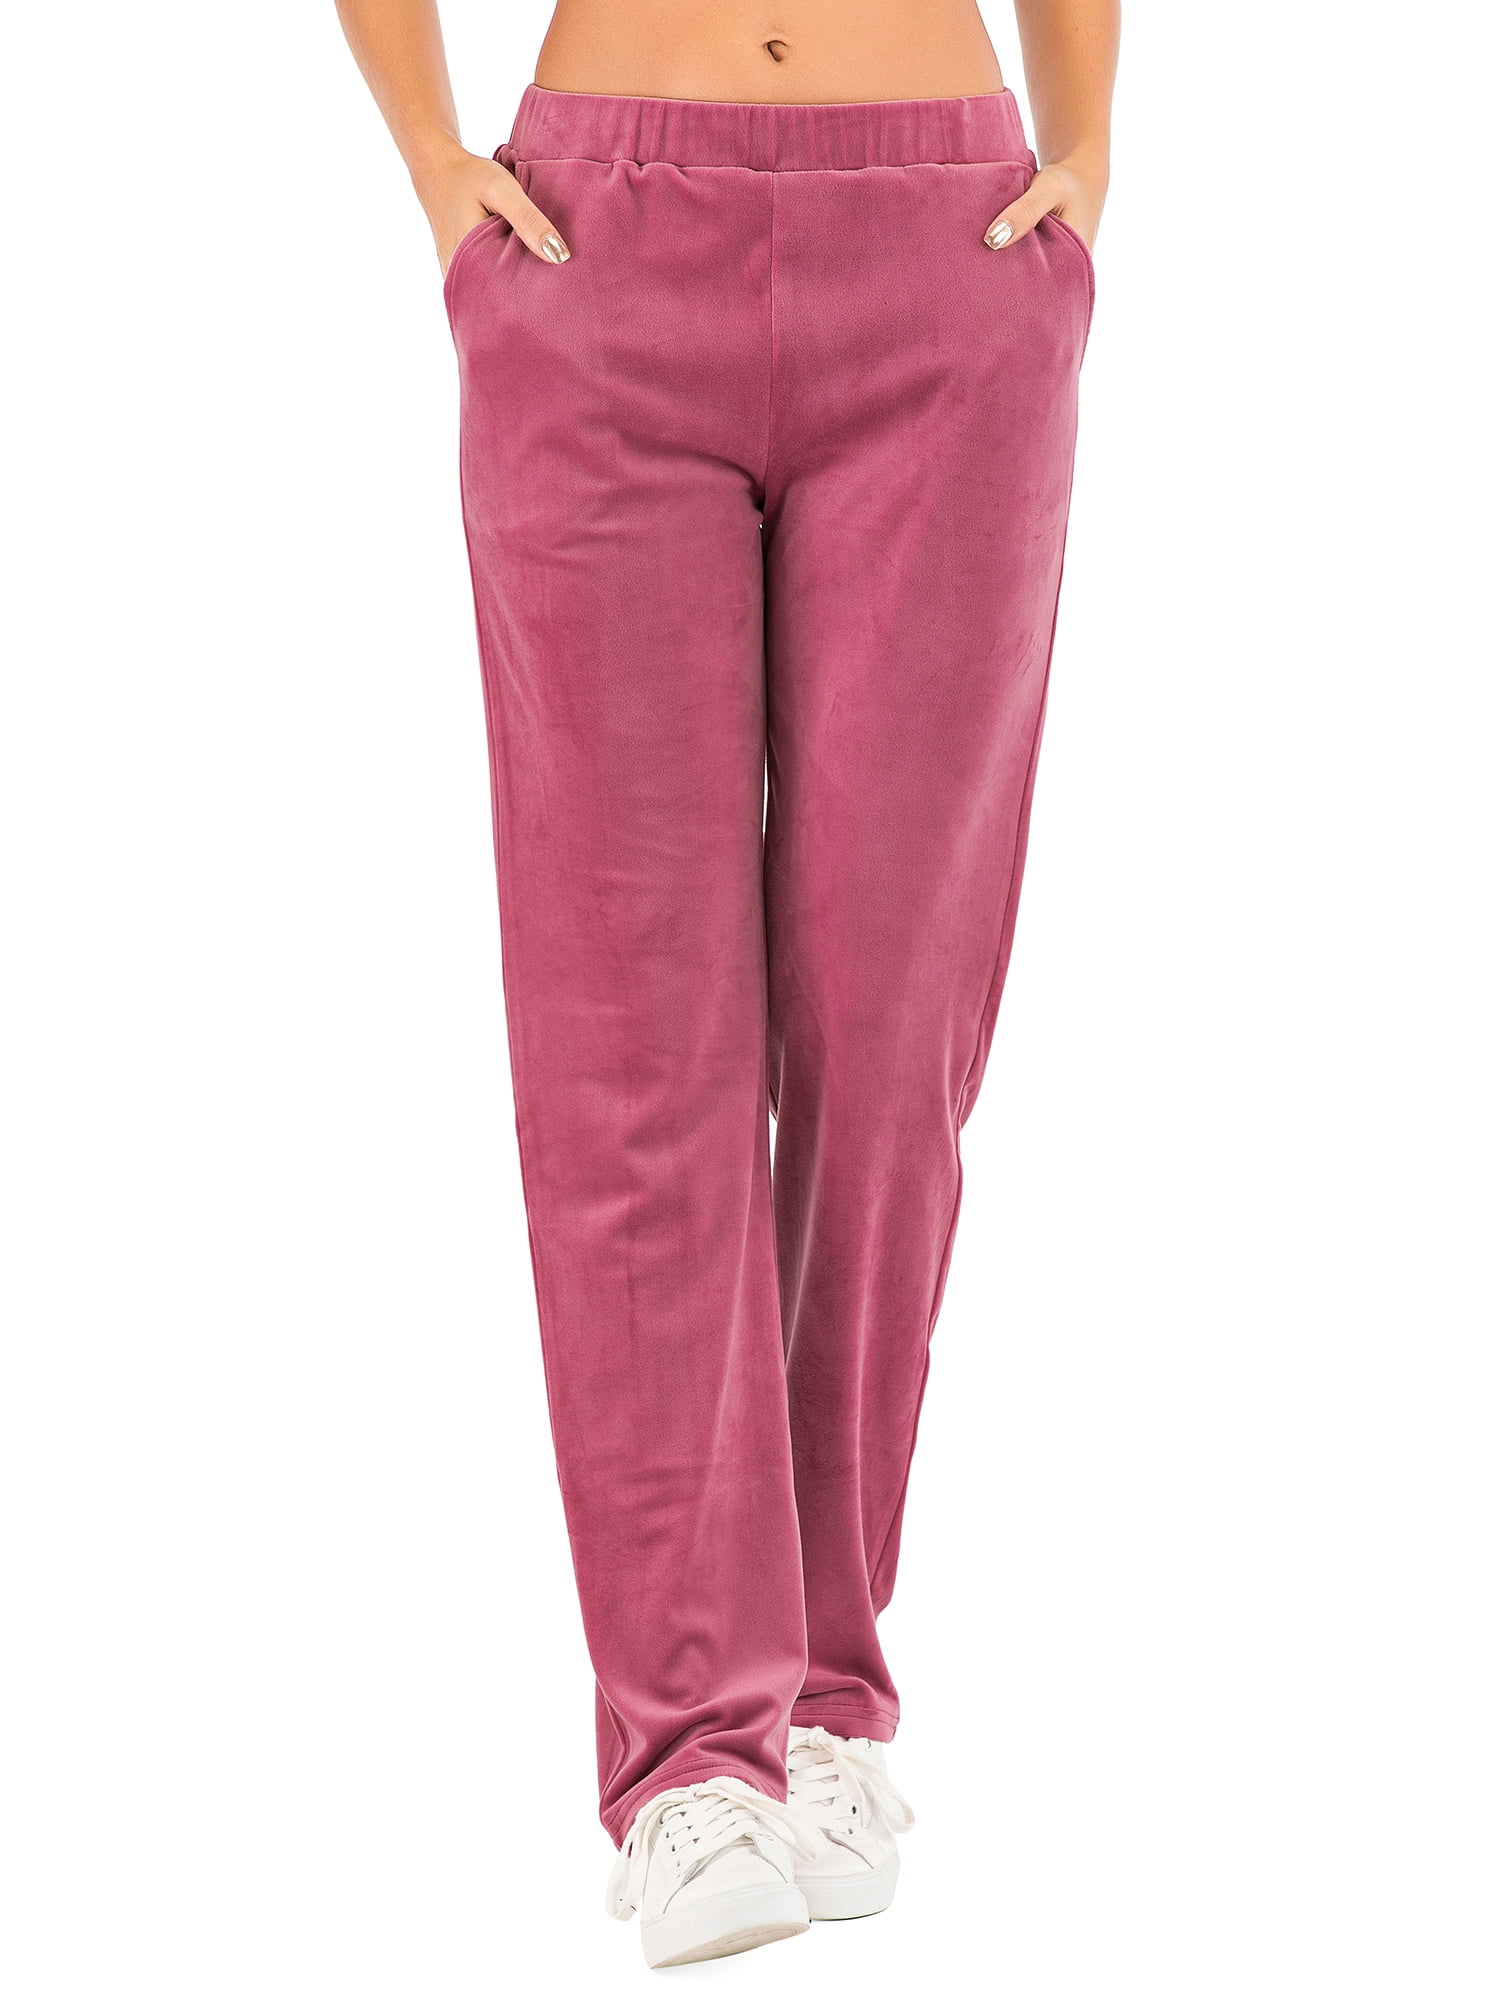 BAG WIZARD - Fashion Ladies' Ultra Soft Velour Tracksuit Pants Active ...